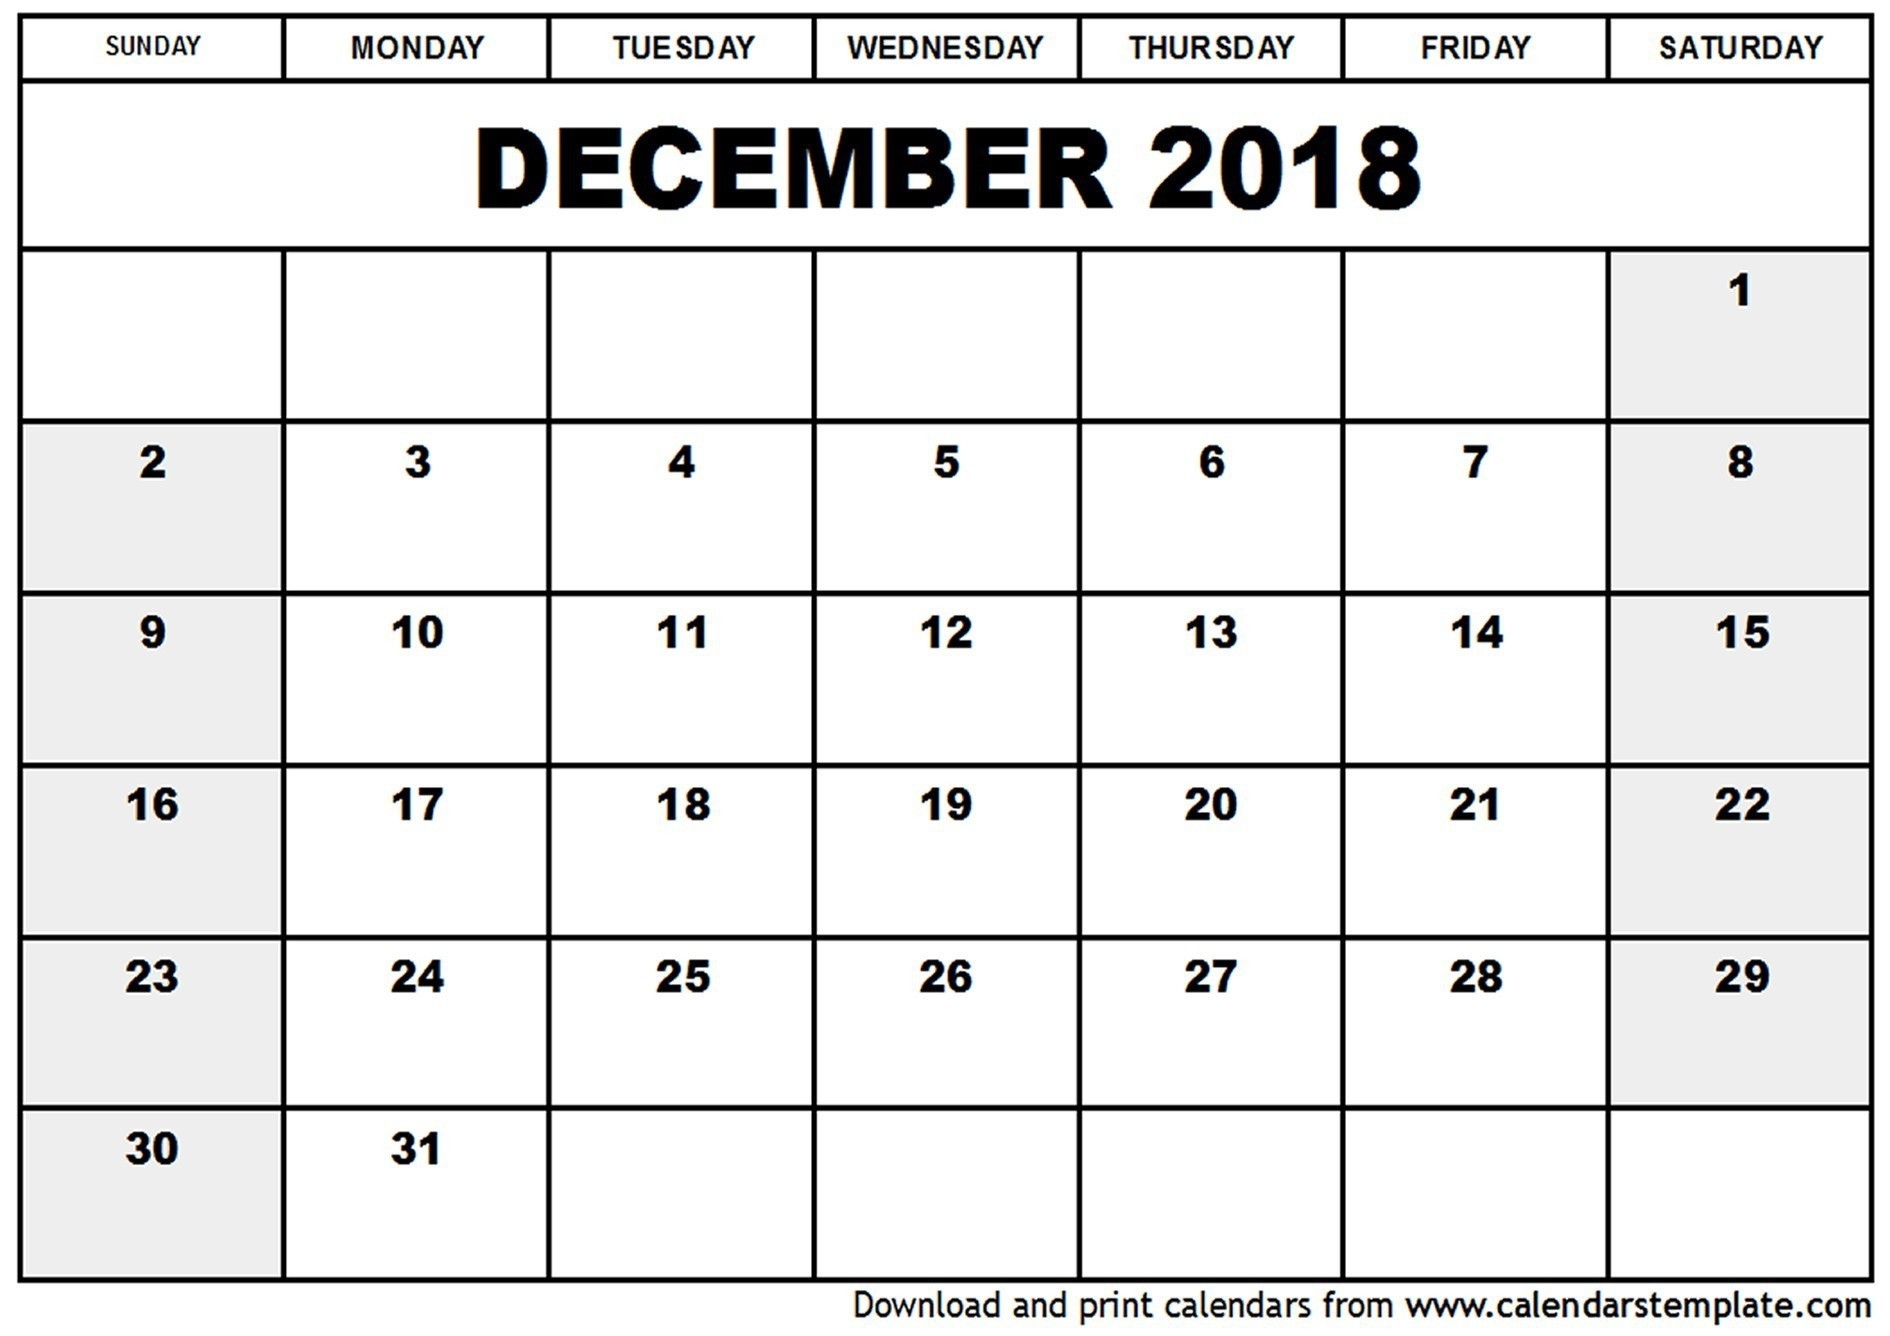 Julian Date Calendar For Year 2018 2019 Julian Date Calendar pertaining to Leap Year Julian Calendar Pdf